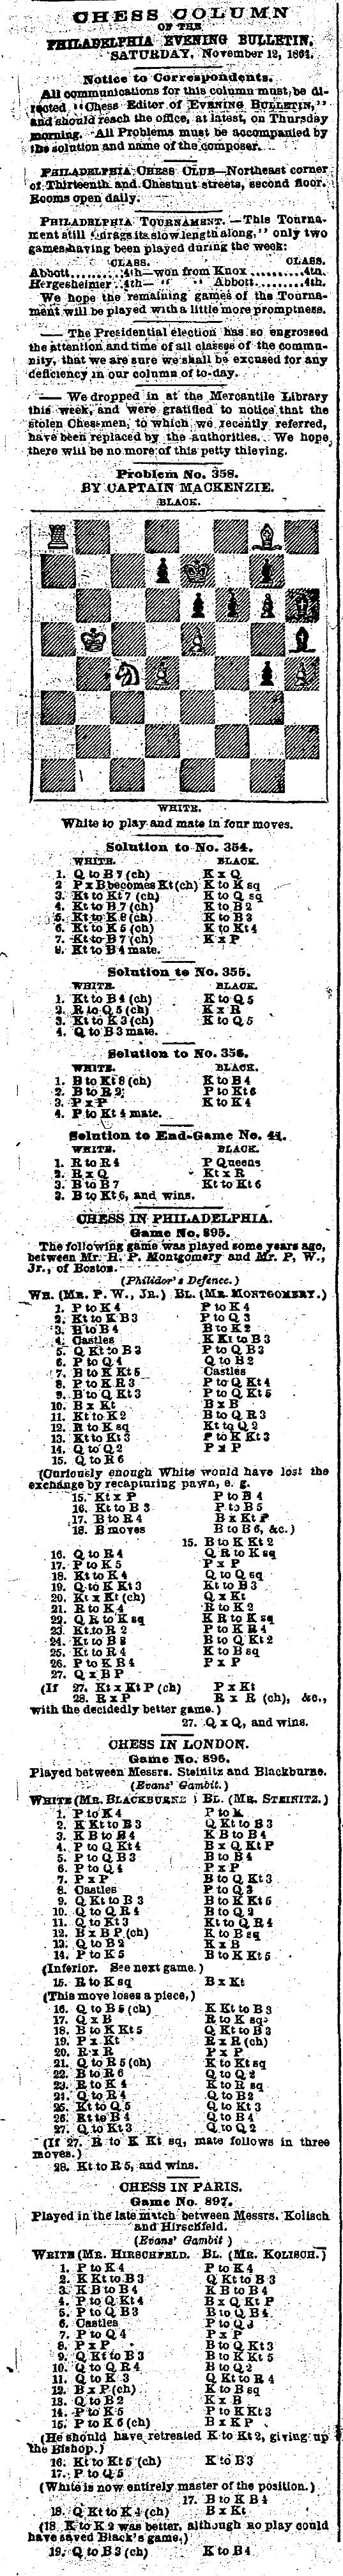 1864.11.12-01 Philadelphia Daily Evening Bulletin.jpg